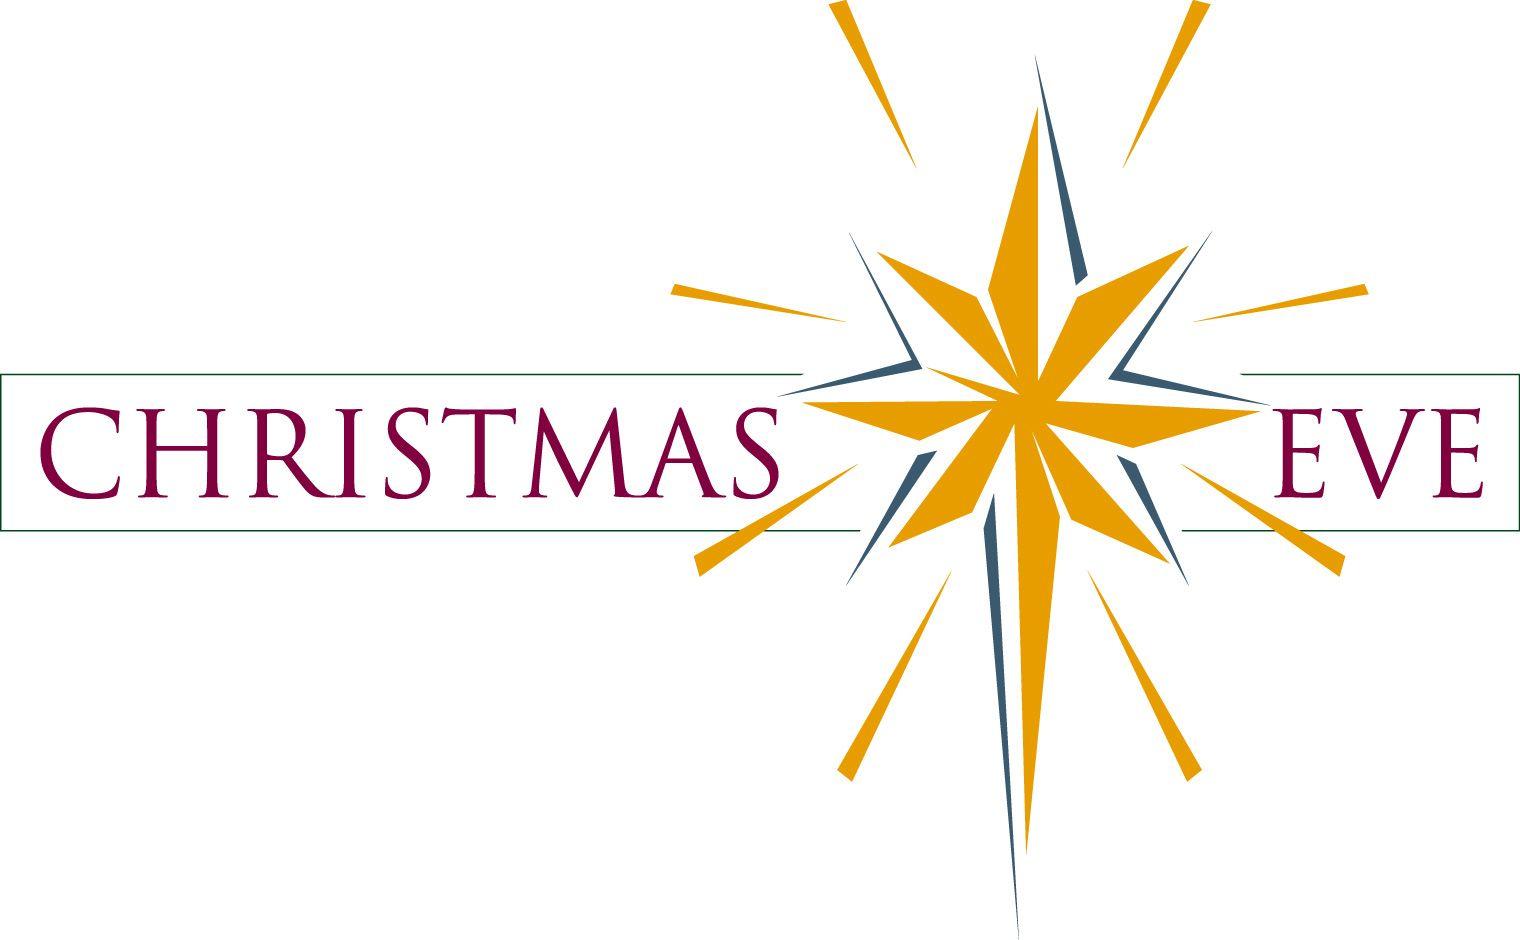 Religious Christmas Logo - Christmas Eve | First Christian Church (Disciples of Christ)